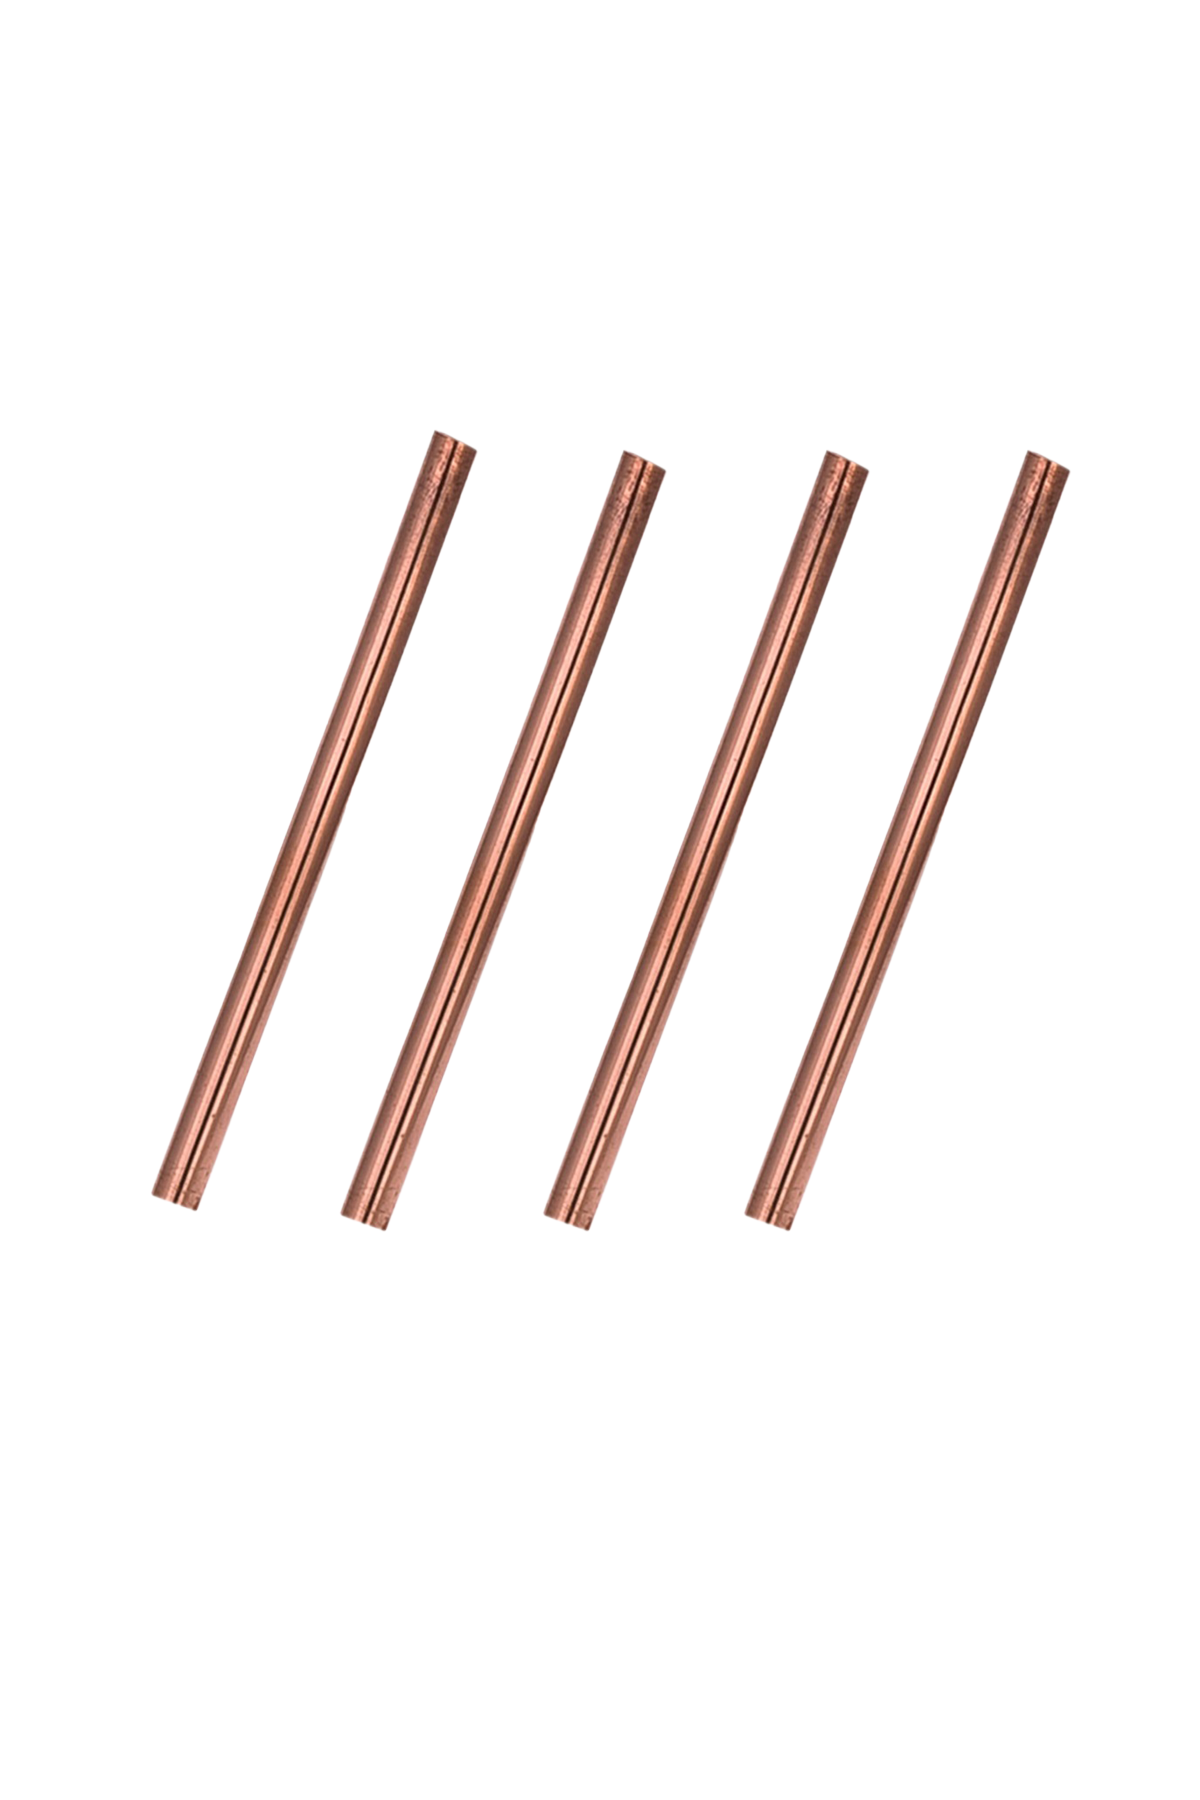 Copper Straw Straigh Set of 4